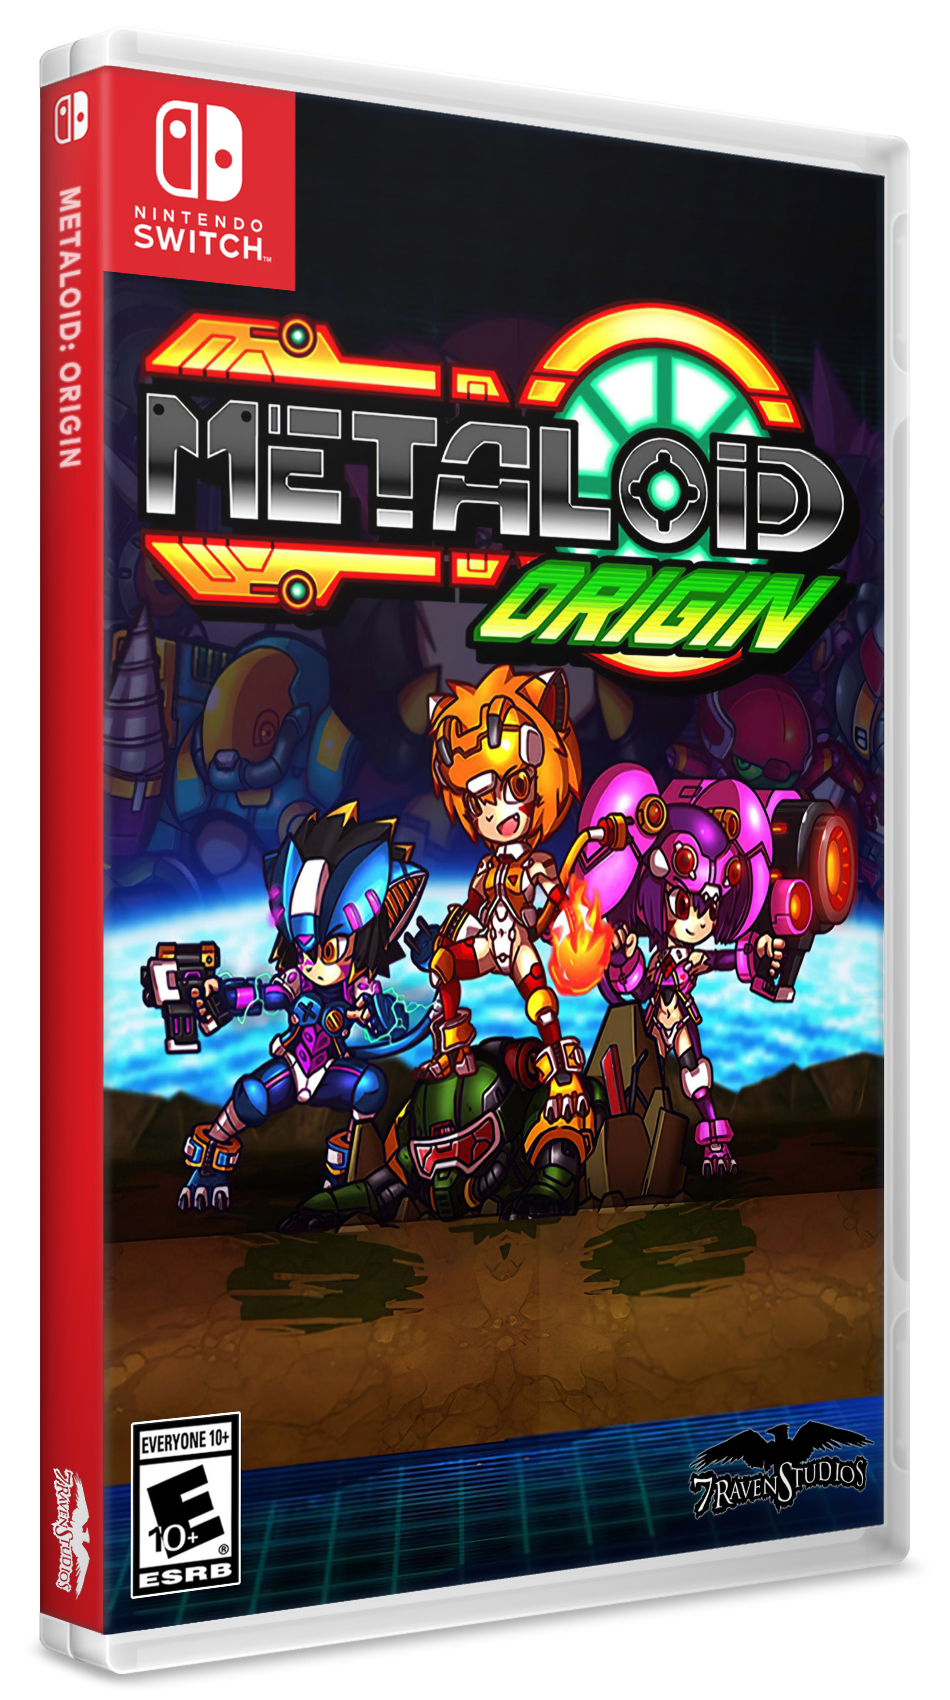 Metaloid: Origin for Nintendo Switch - Nintendo Official Site